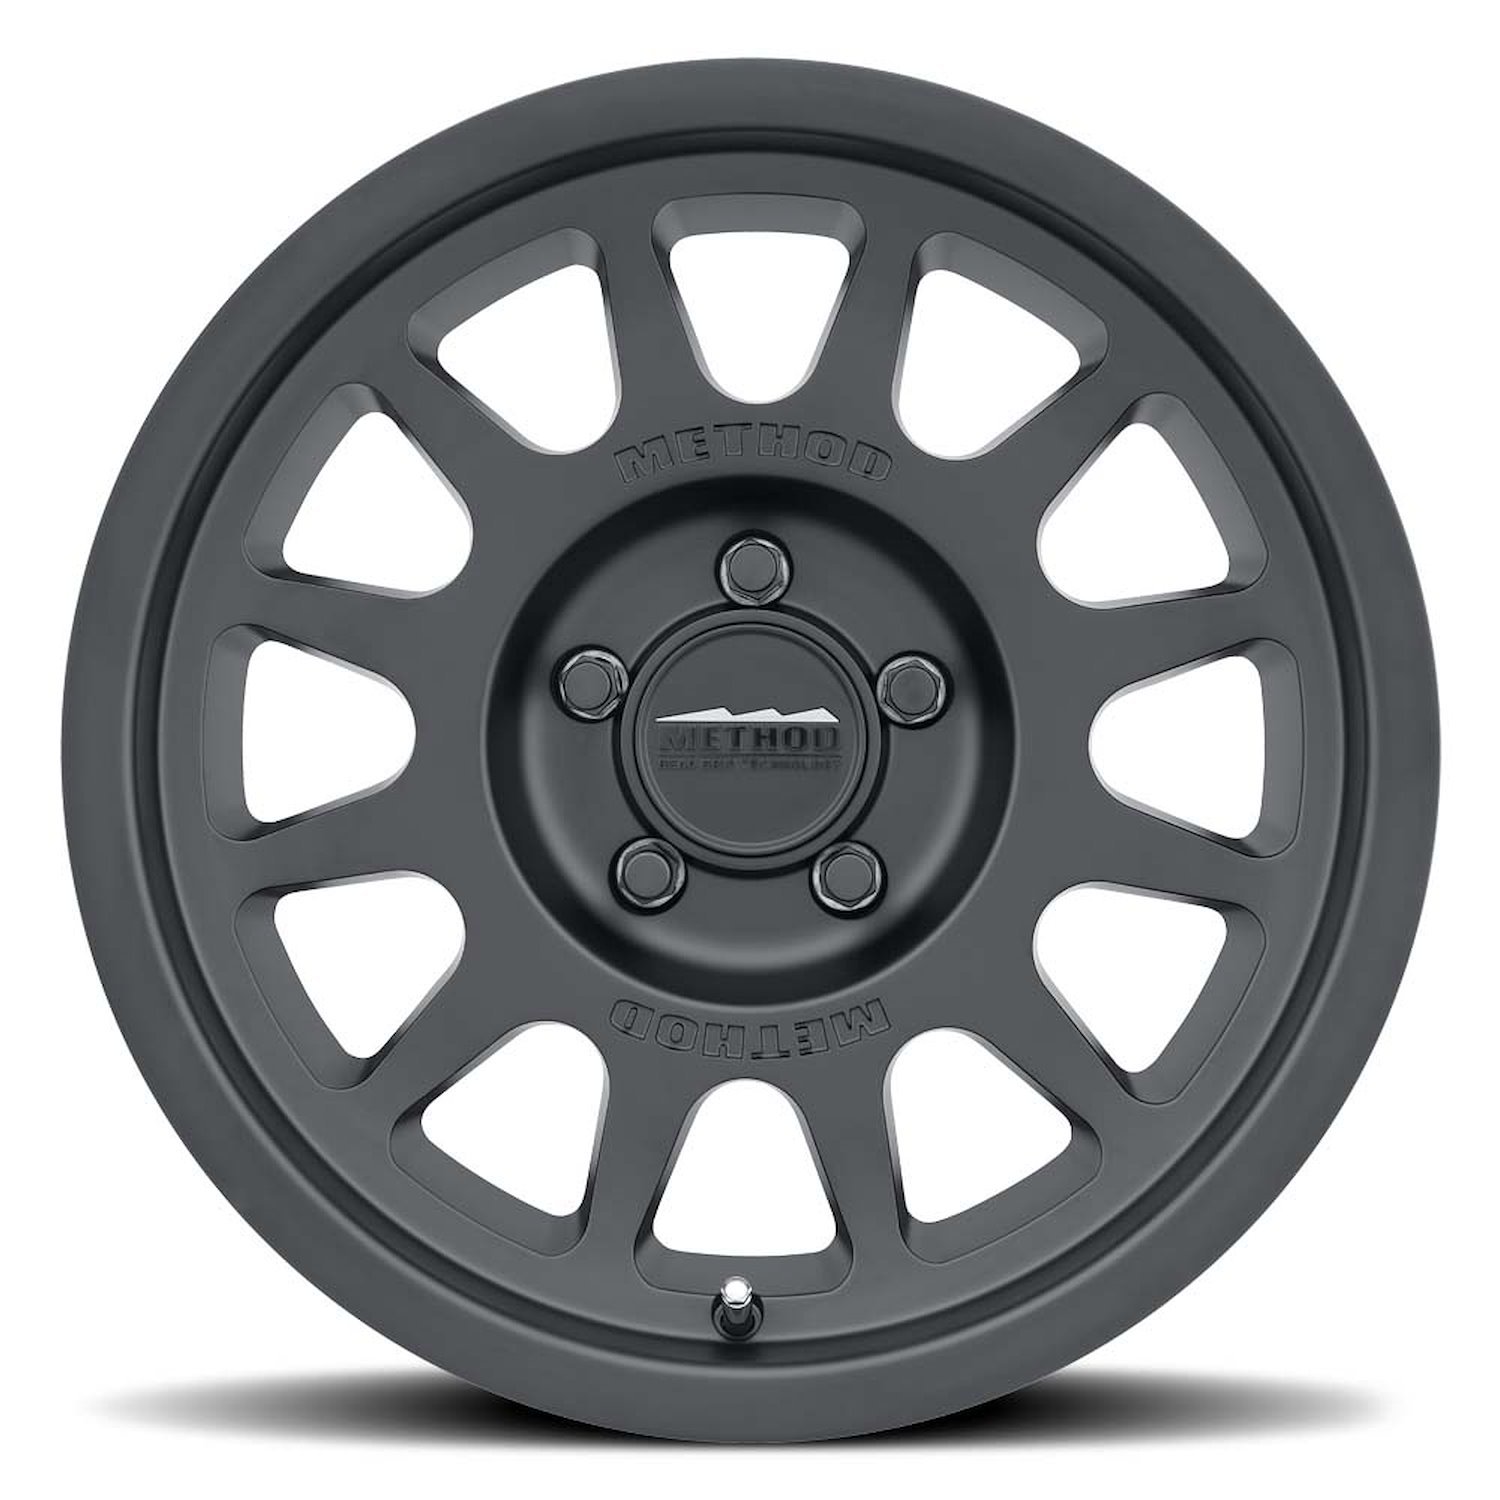 MR70377556550 TRAIL MR703 Bead Grip Wheel [Size: 17" x 7.5"] Matte Black